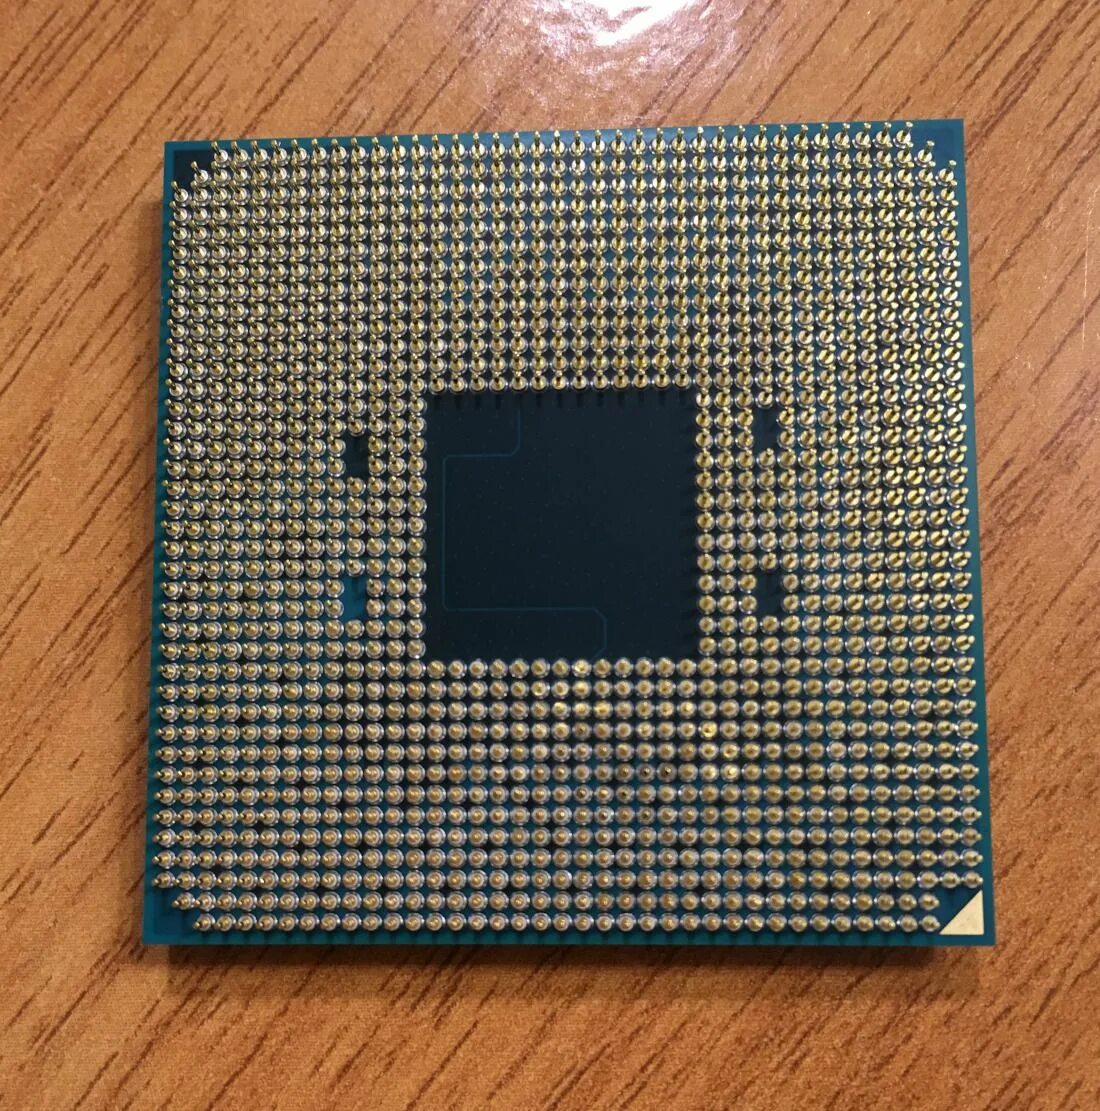 5 3400g купить. AMD Ryzen 5 3400g. Процессор AMD Ryzen 5 3400g OEM. Процессор АМД райзен 5. AMD Ryzen 3 1200.